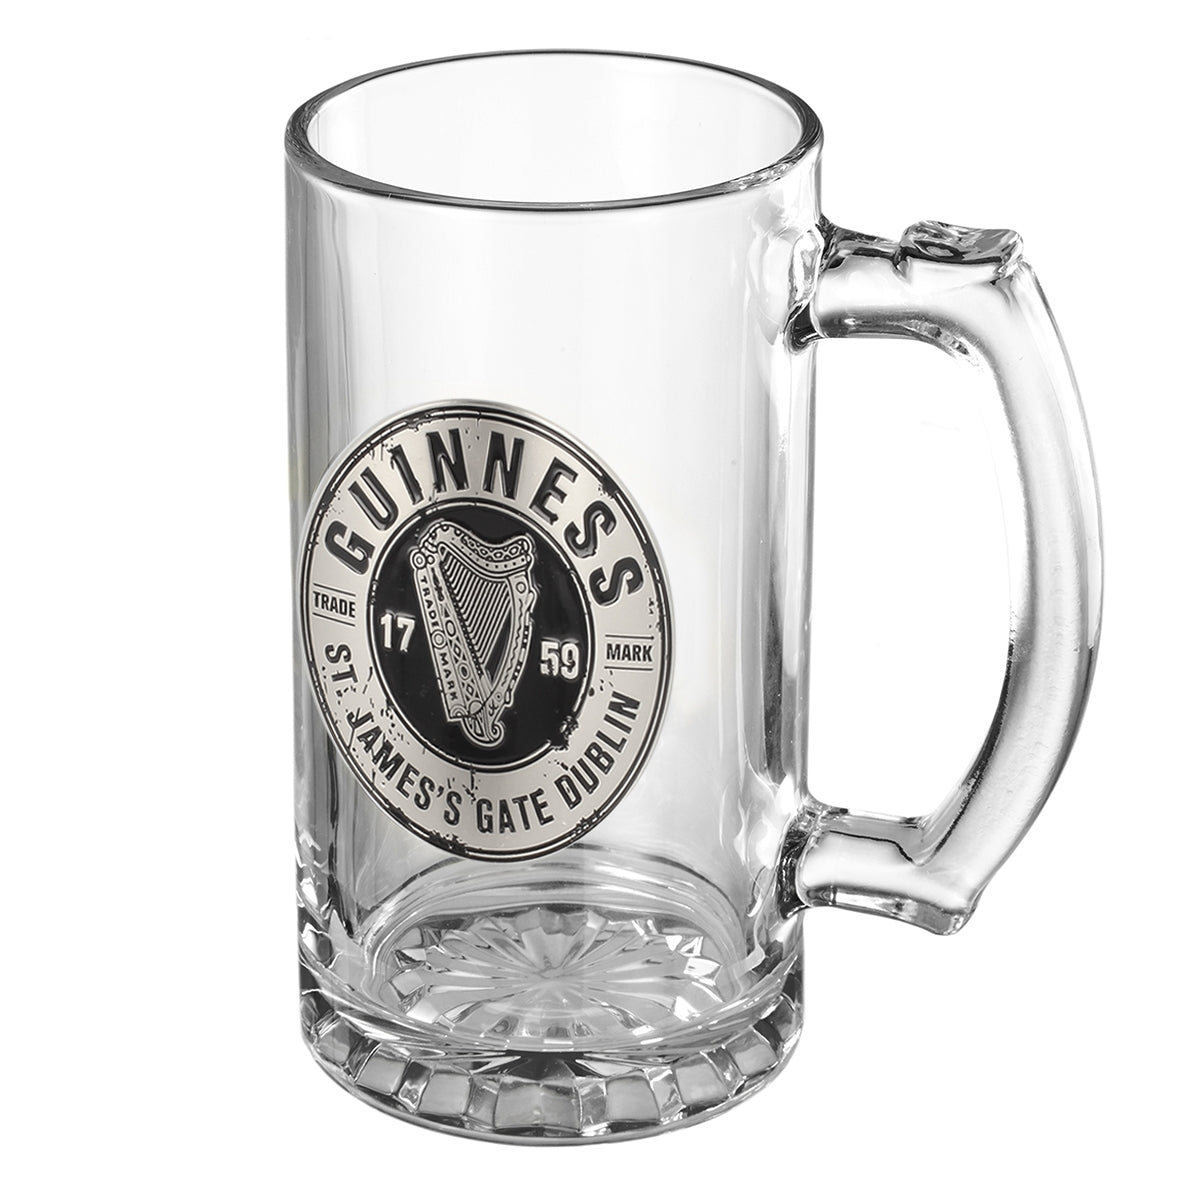 A Guinness Pewter Logo Tankard mug.